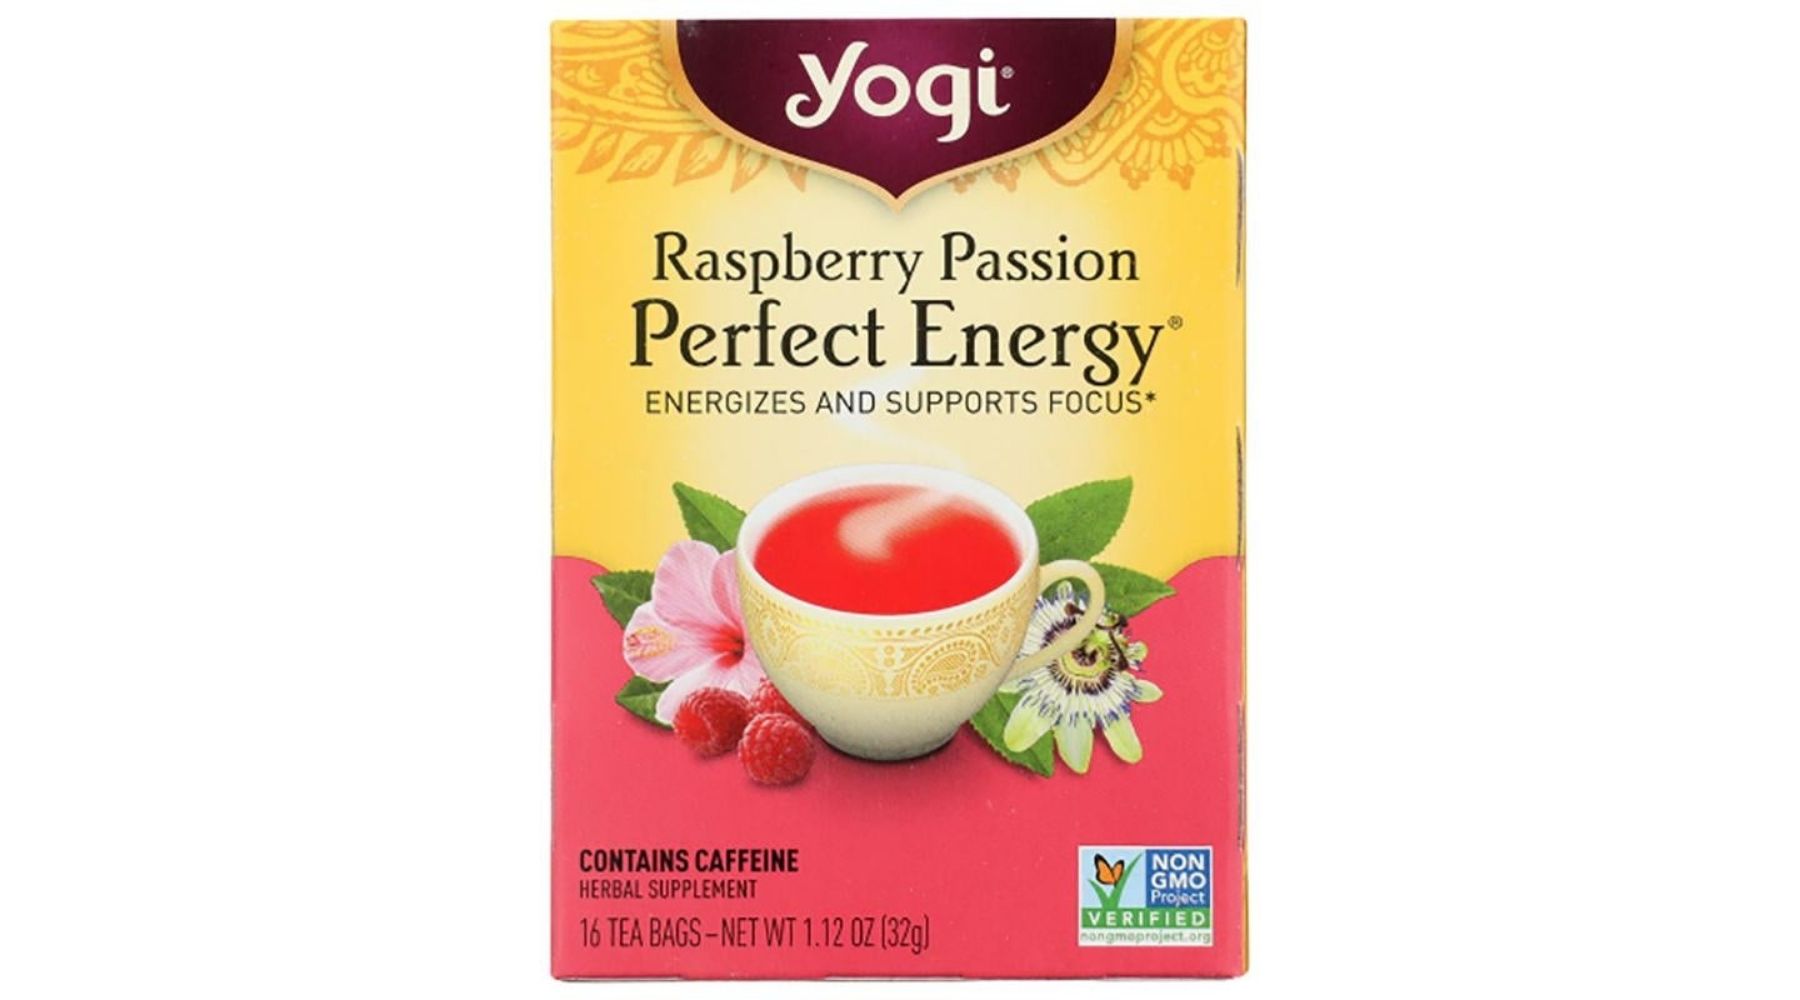 Yogi Tea - Raspberry Passion Perfect Energy, 16 Bags, 1.1 oz - buy now